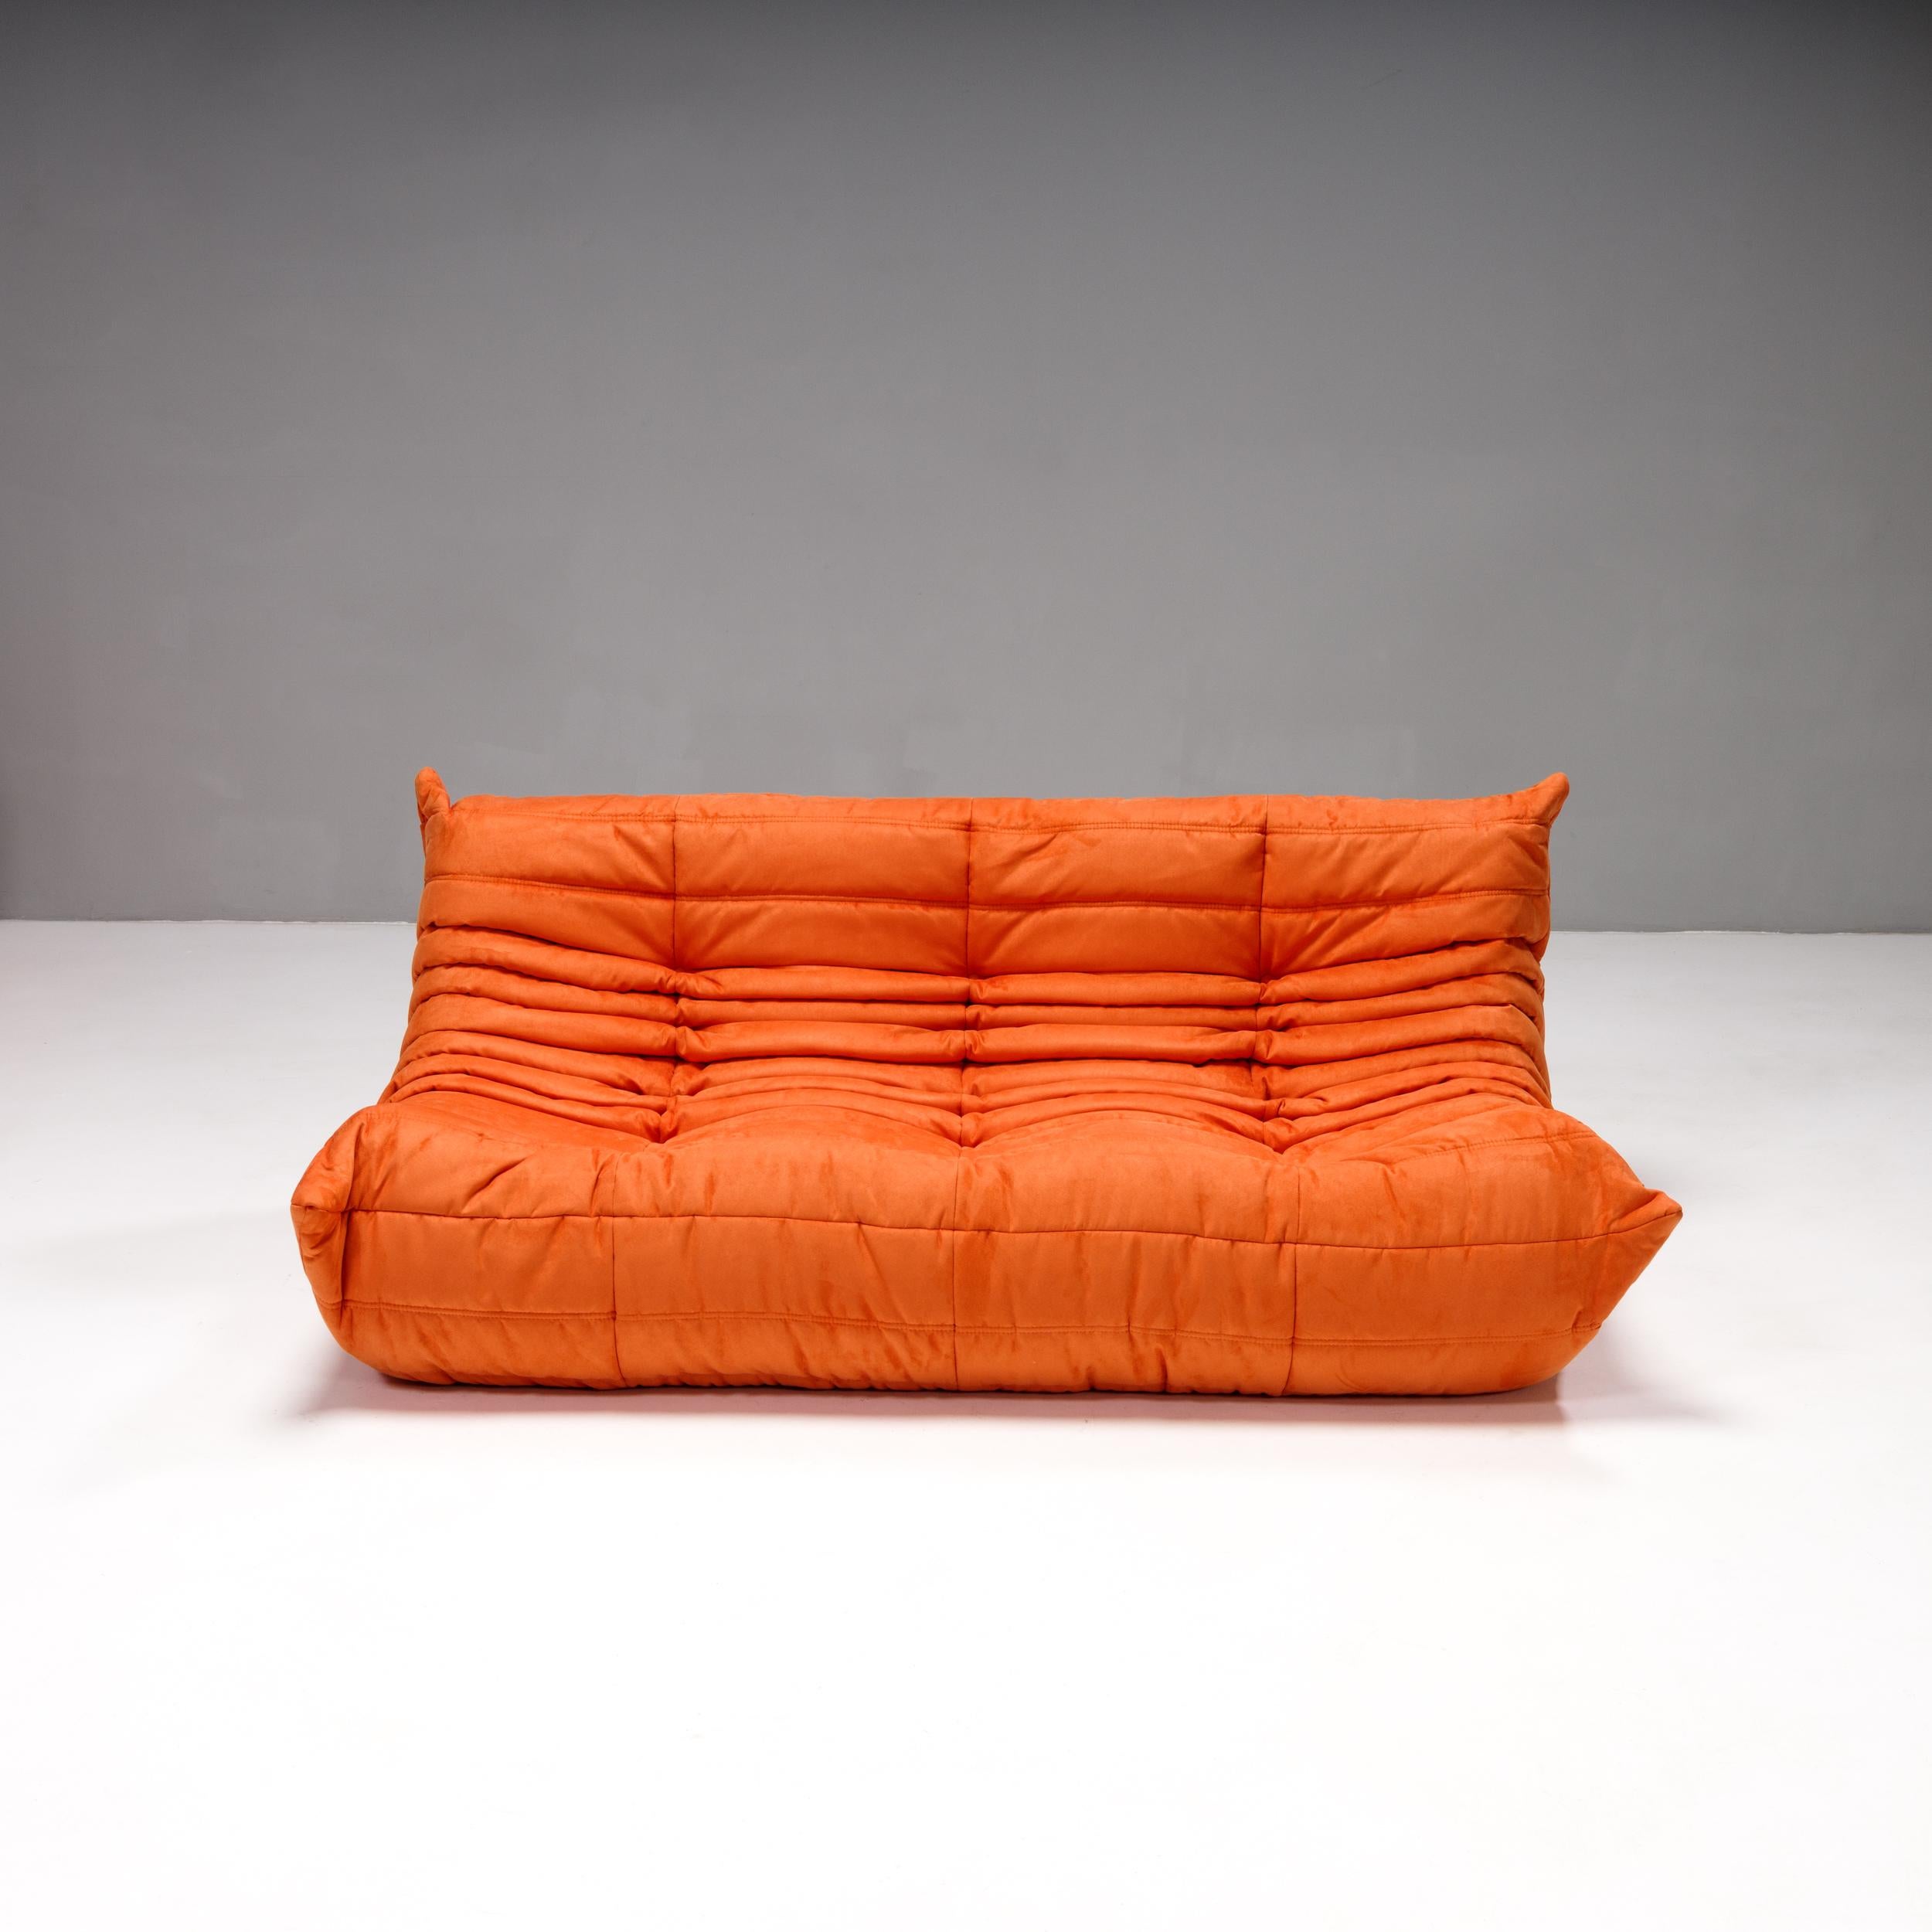 Michel Ducaroy for Ligne Roset Orange Togo Modular Sofas, Set of 5 For Sale 1